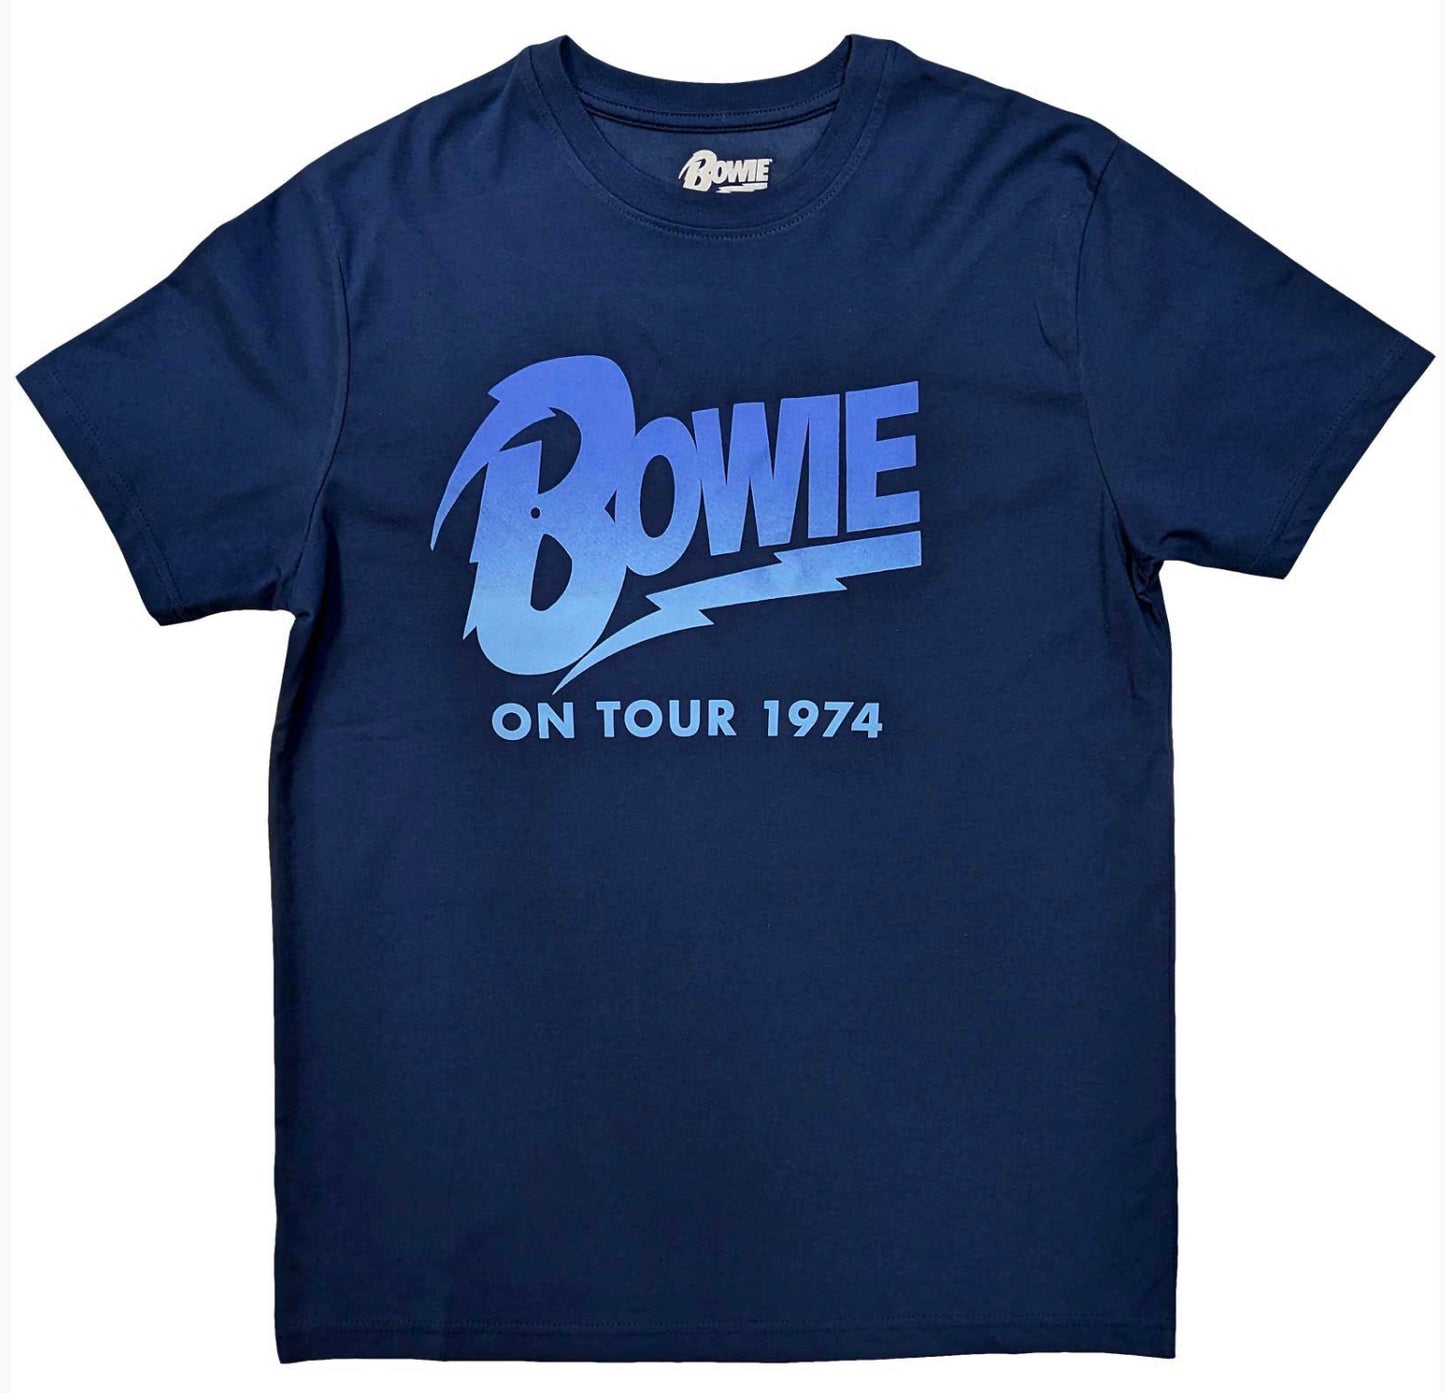 David Bowie T-shirts